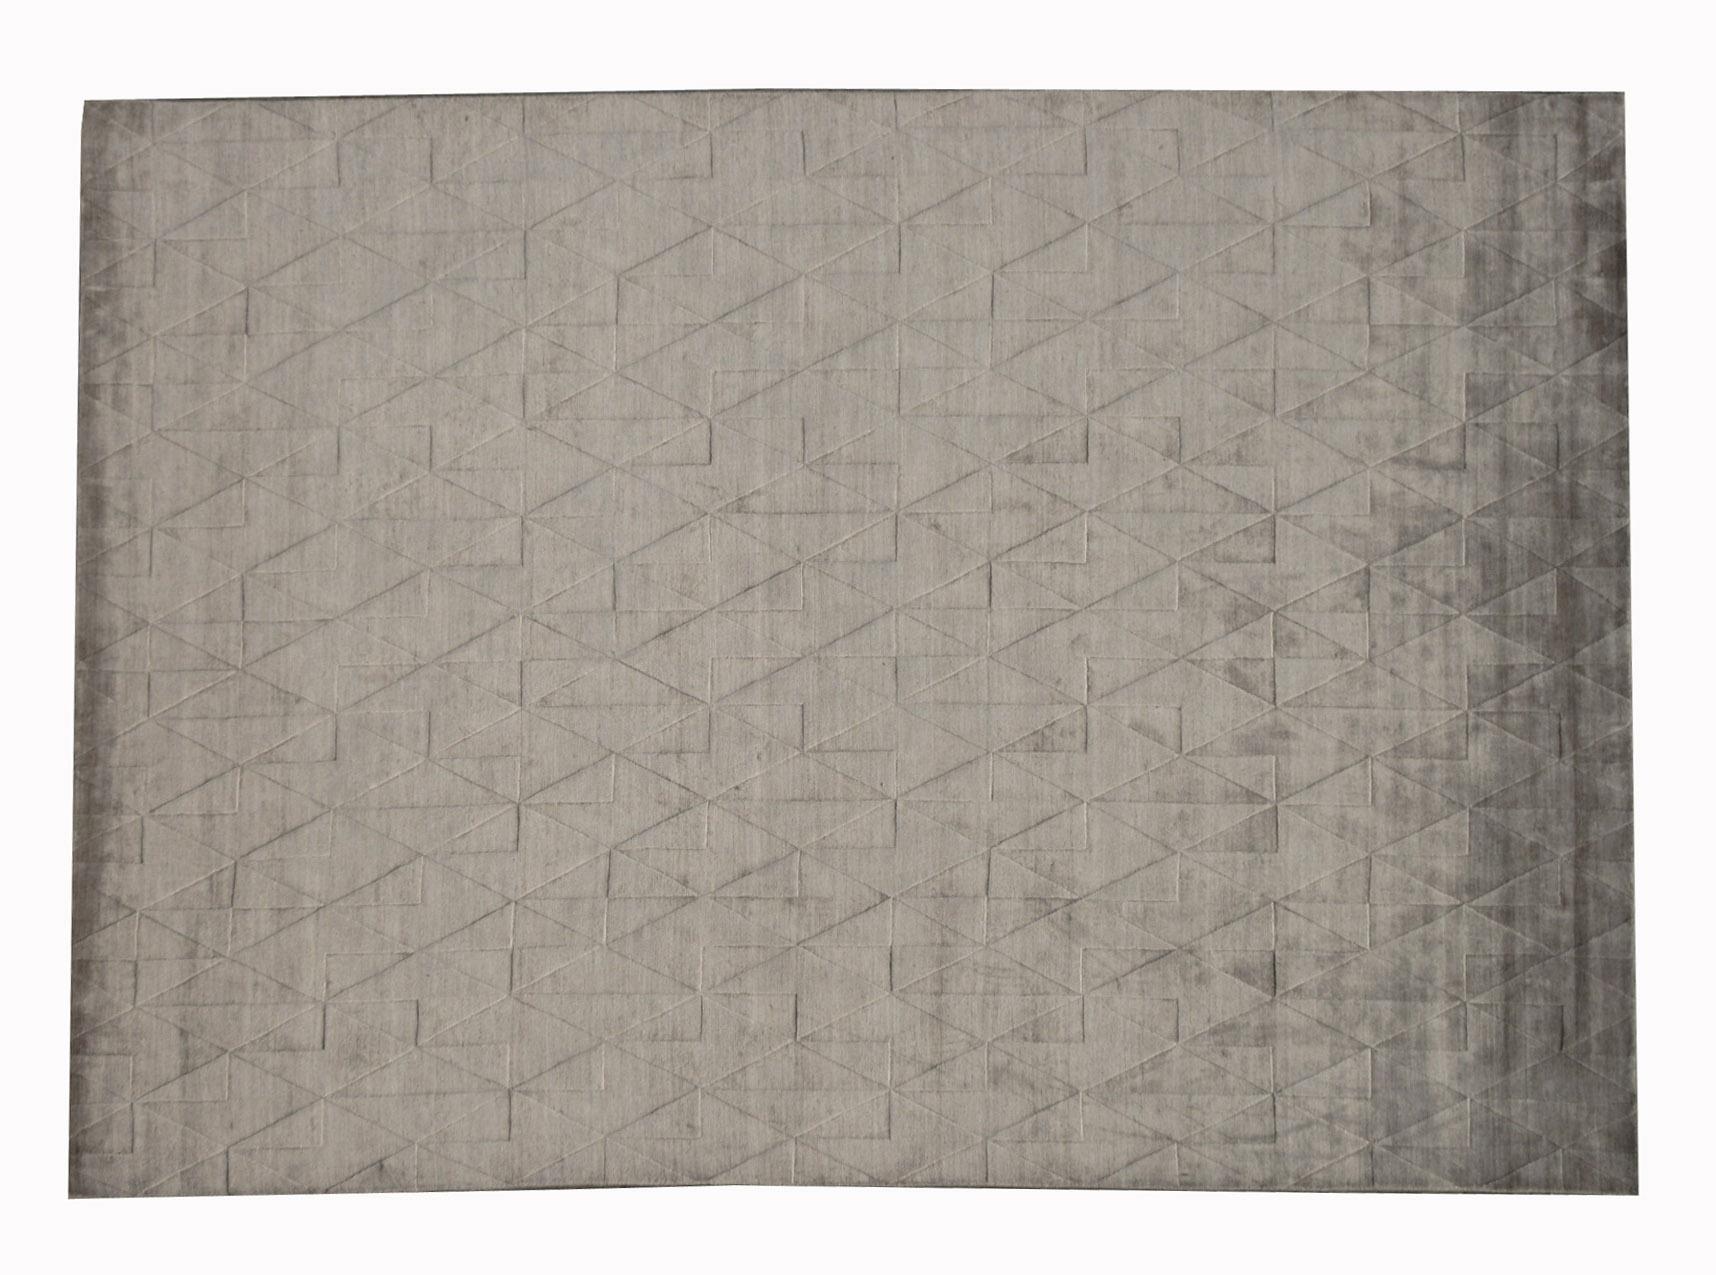 Handmade silk pile on a cotton foundation.

Dimensions: 8'2